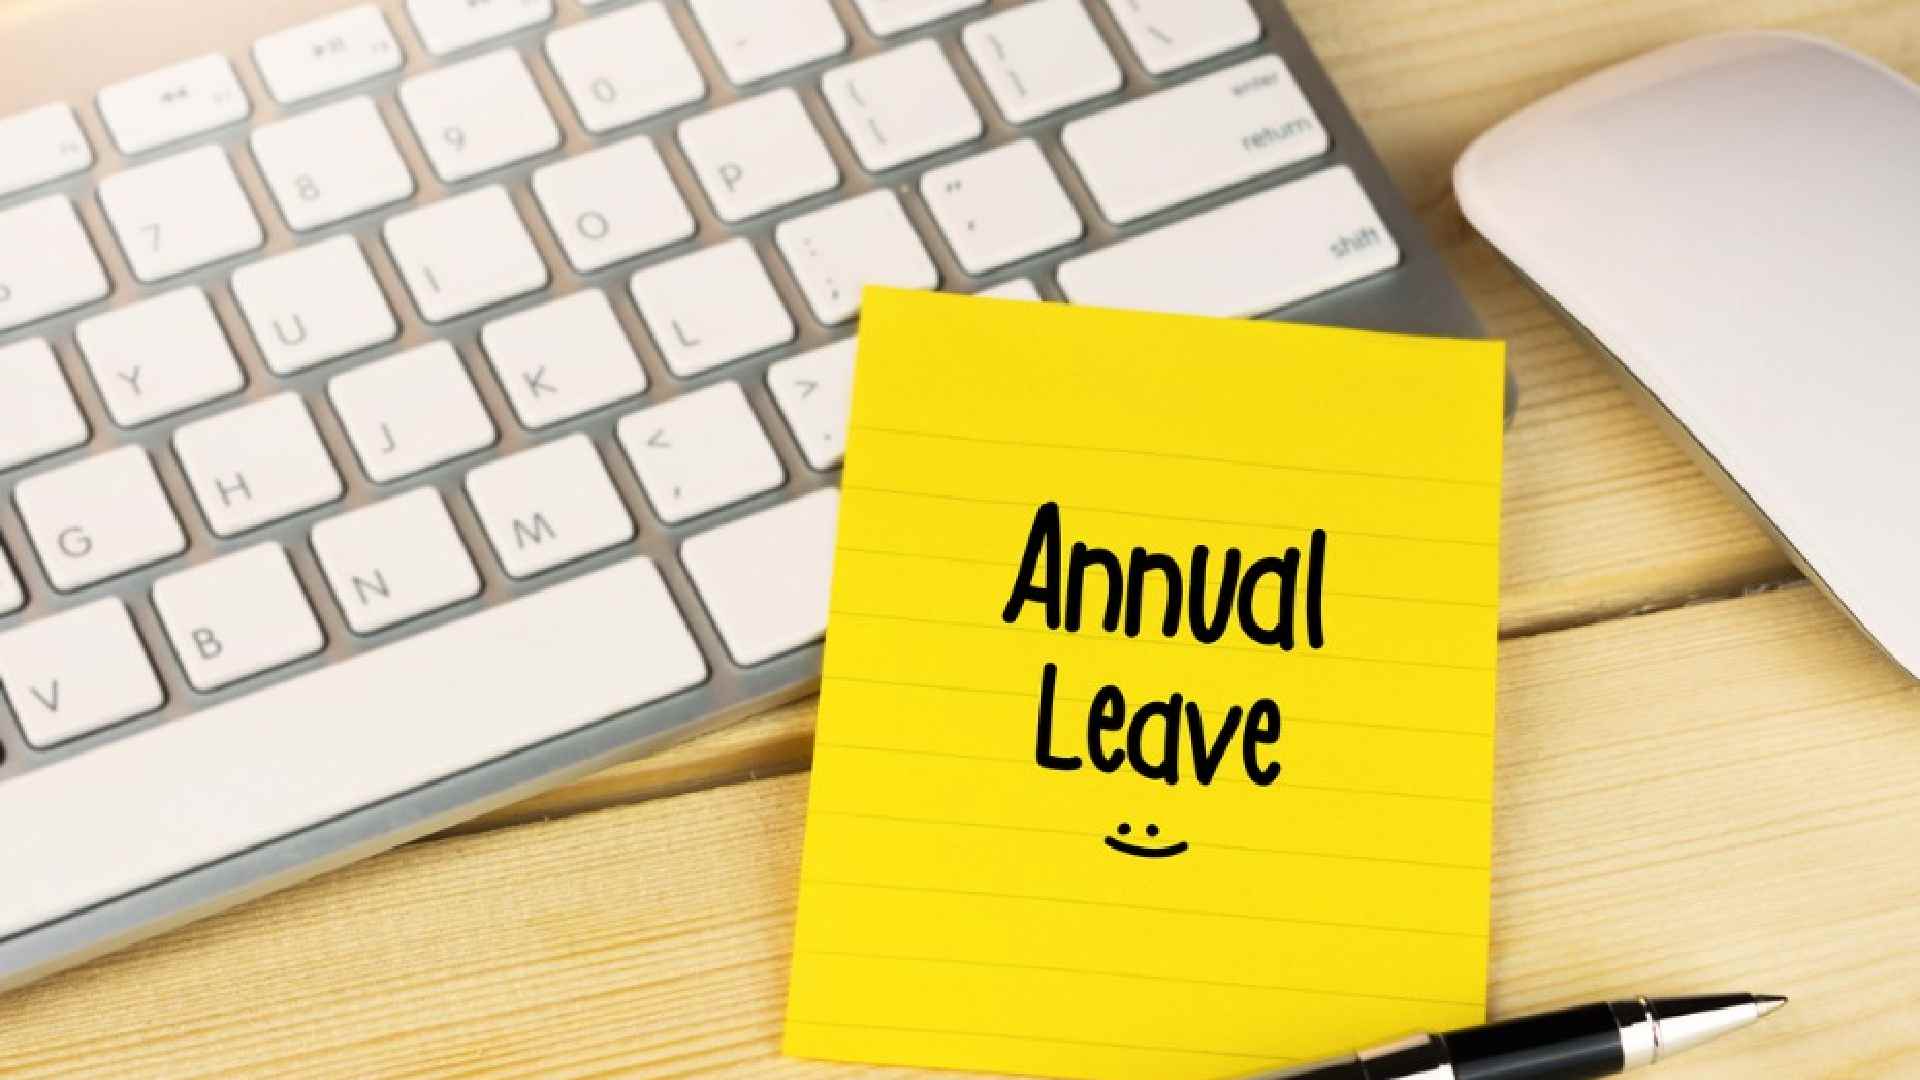 Annual leave in UAE